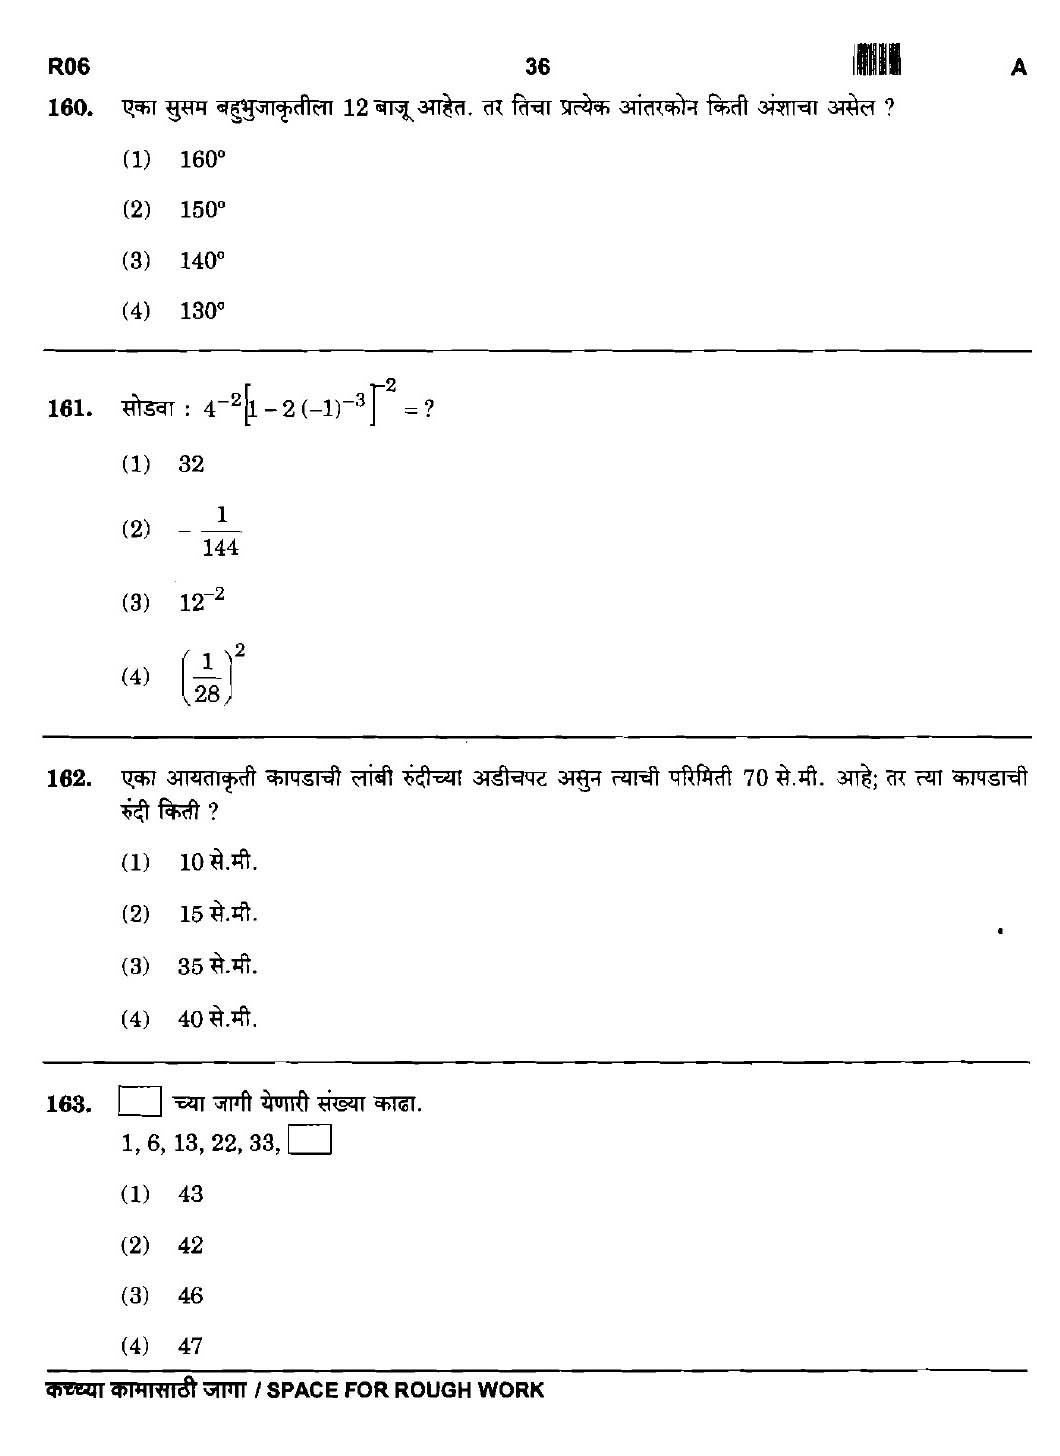 Maharashtra PSC Clerk Typist Exam Question Paper 2015 35